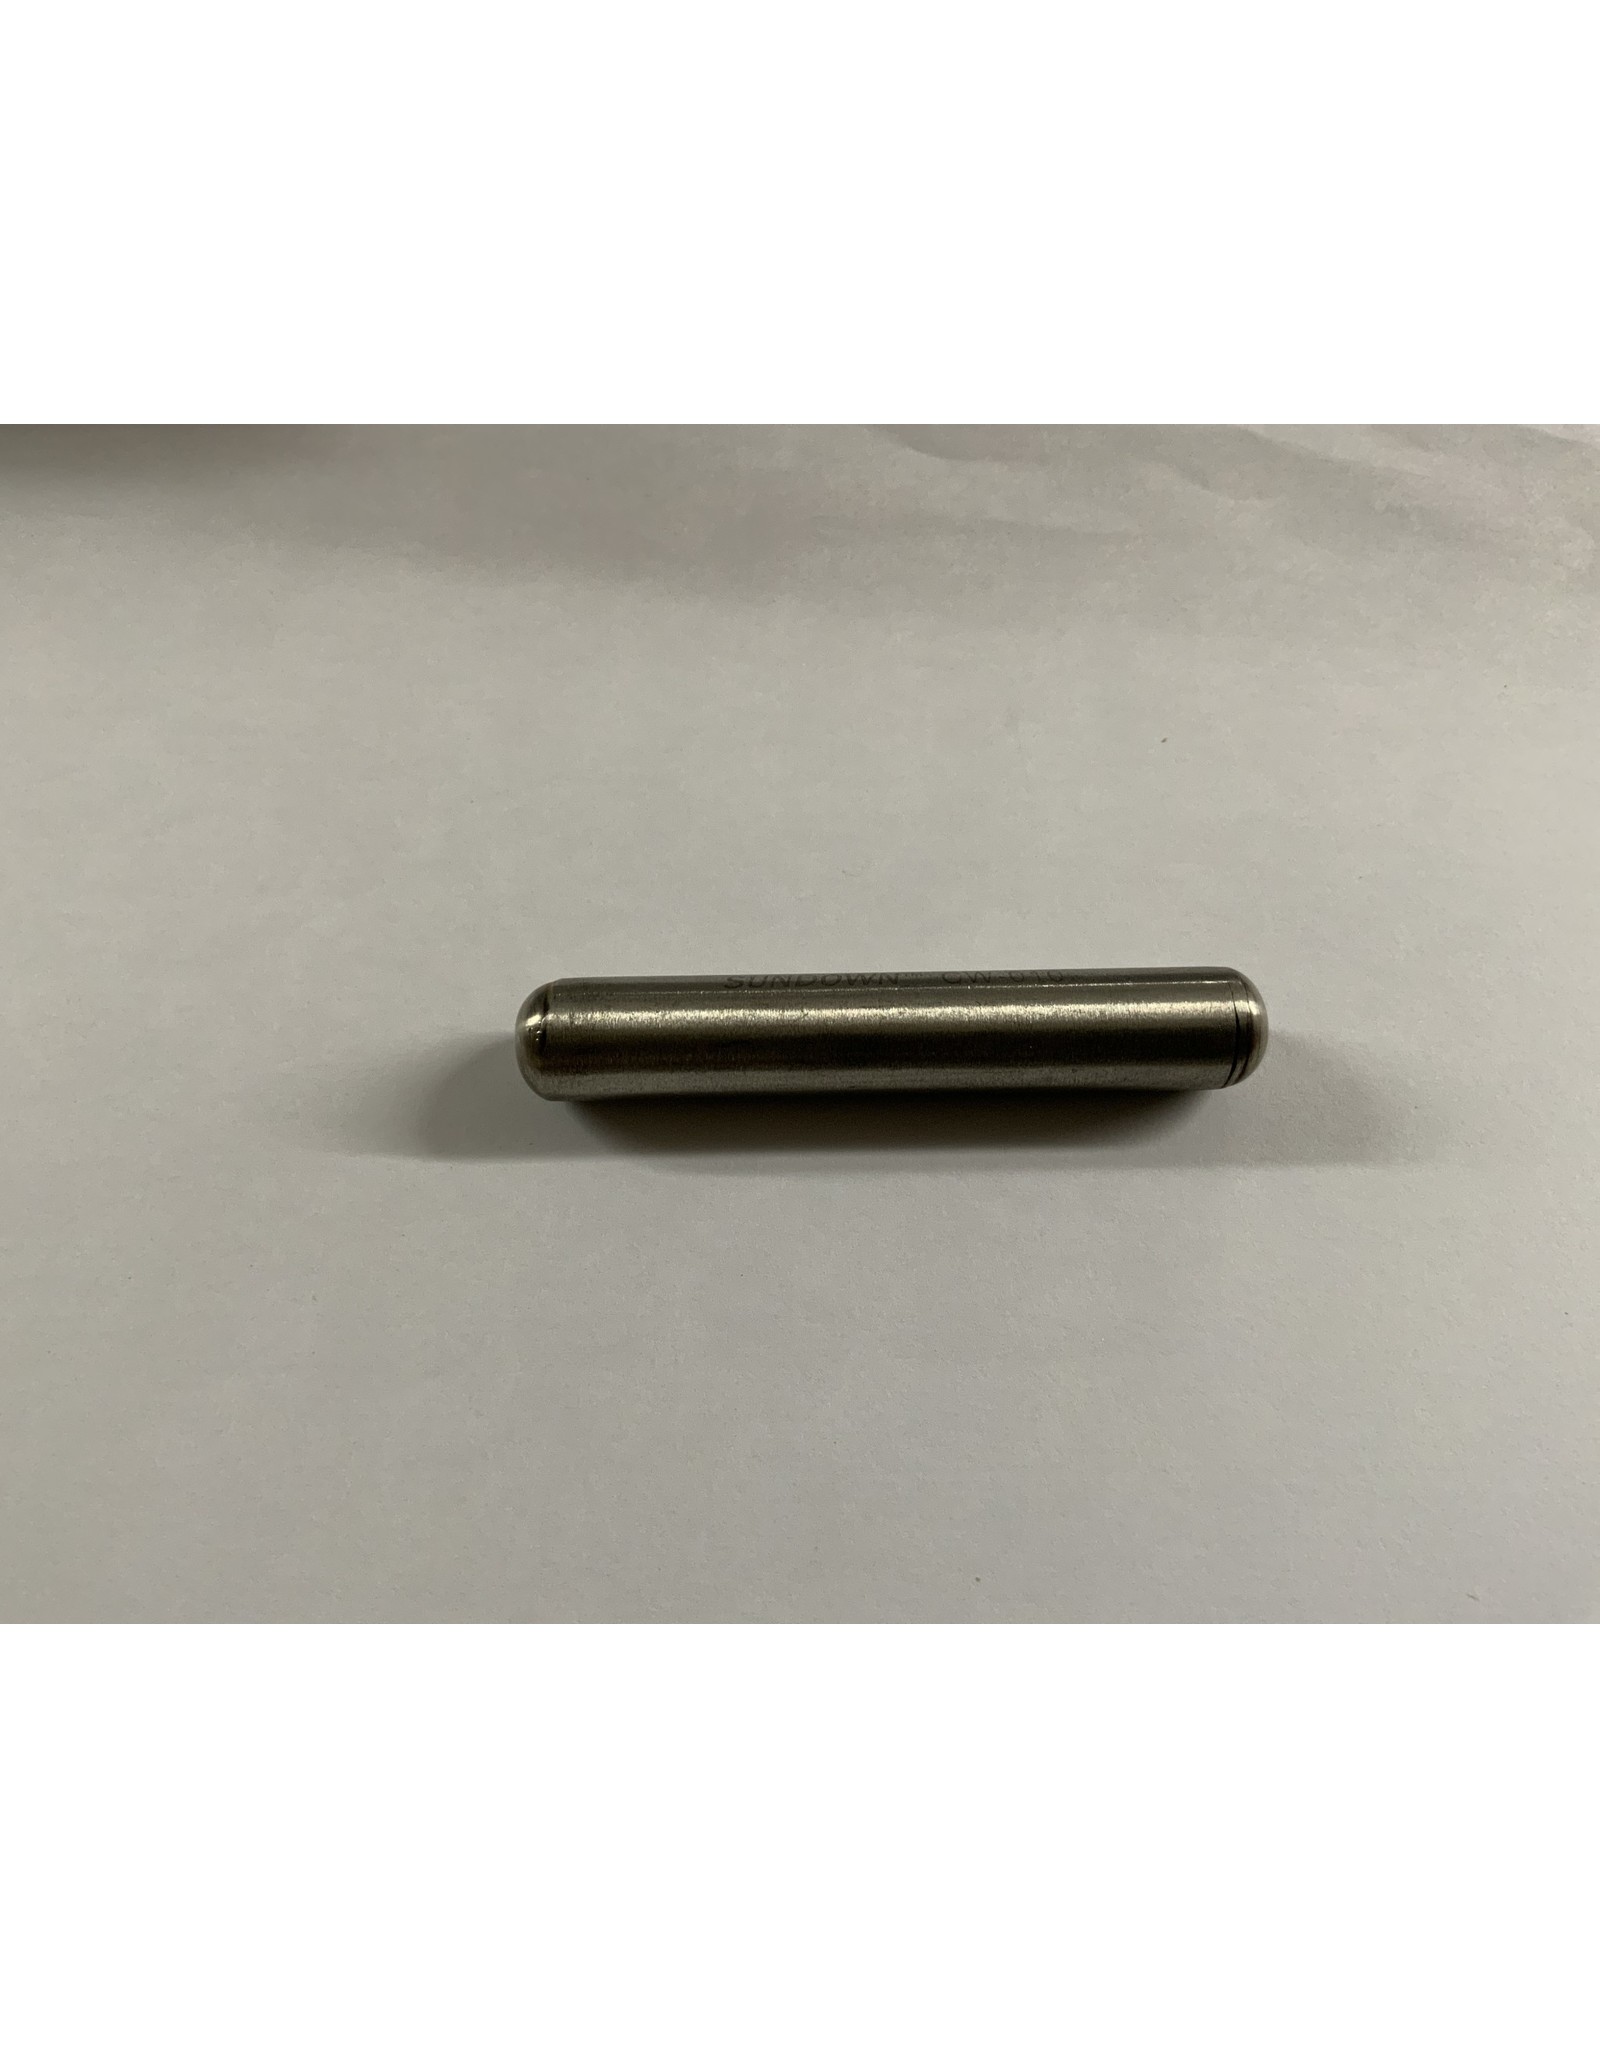 Magnet Round Low - 207-123